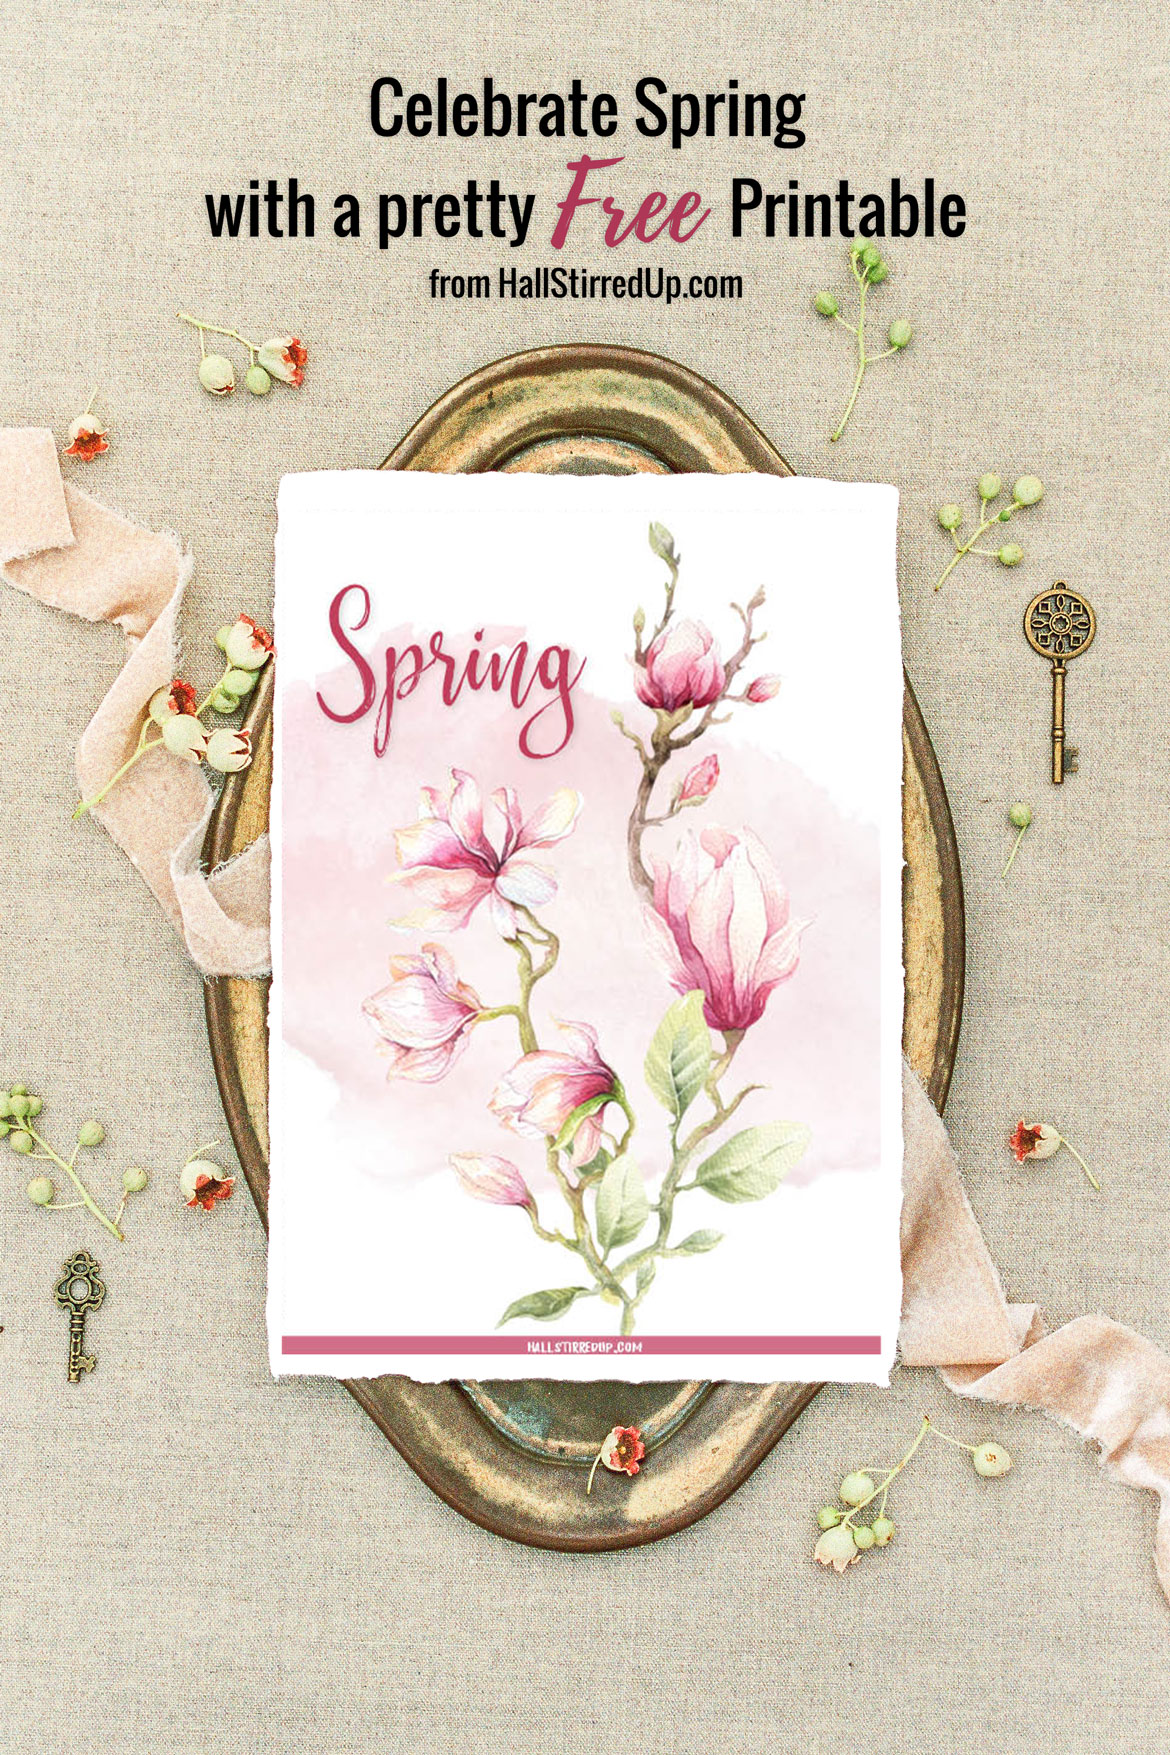 Celebrate spring with a pretty free printable